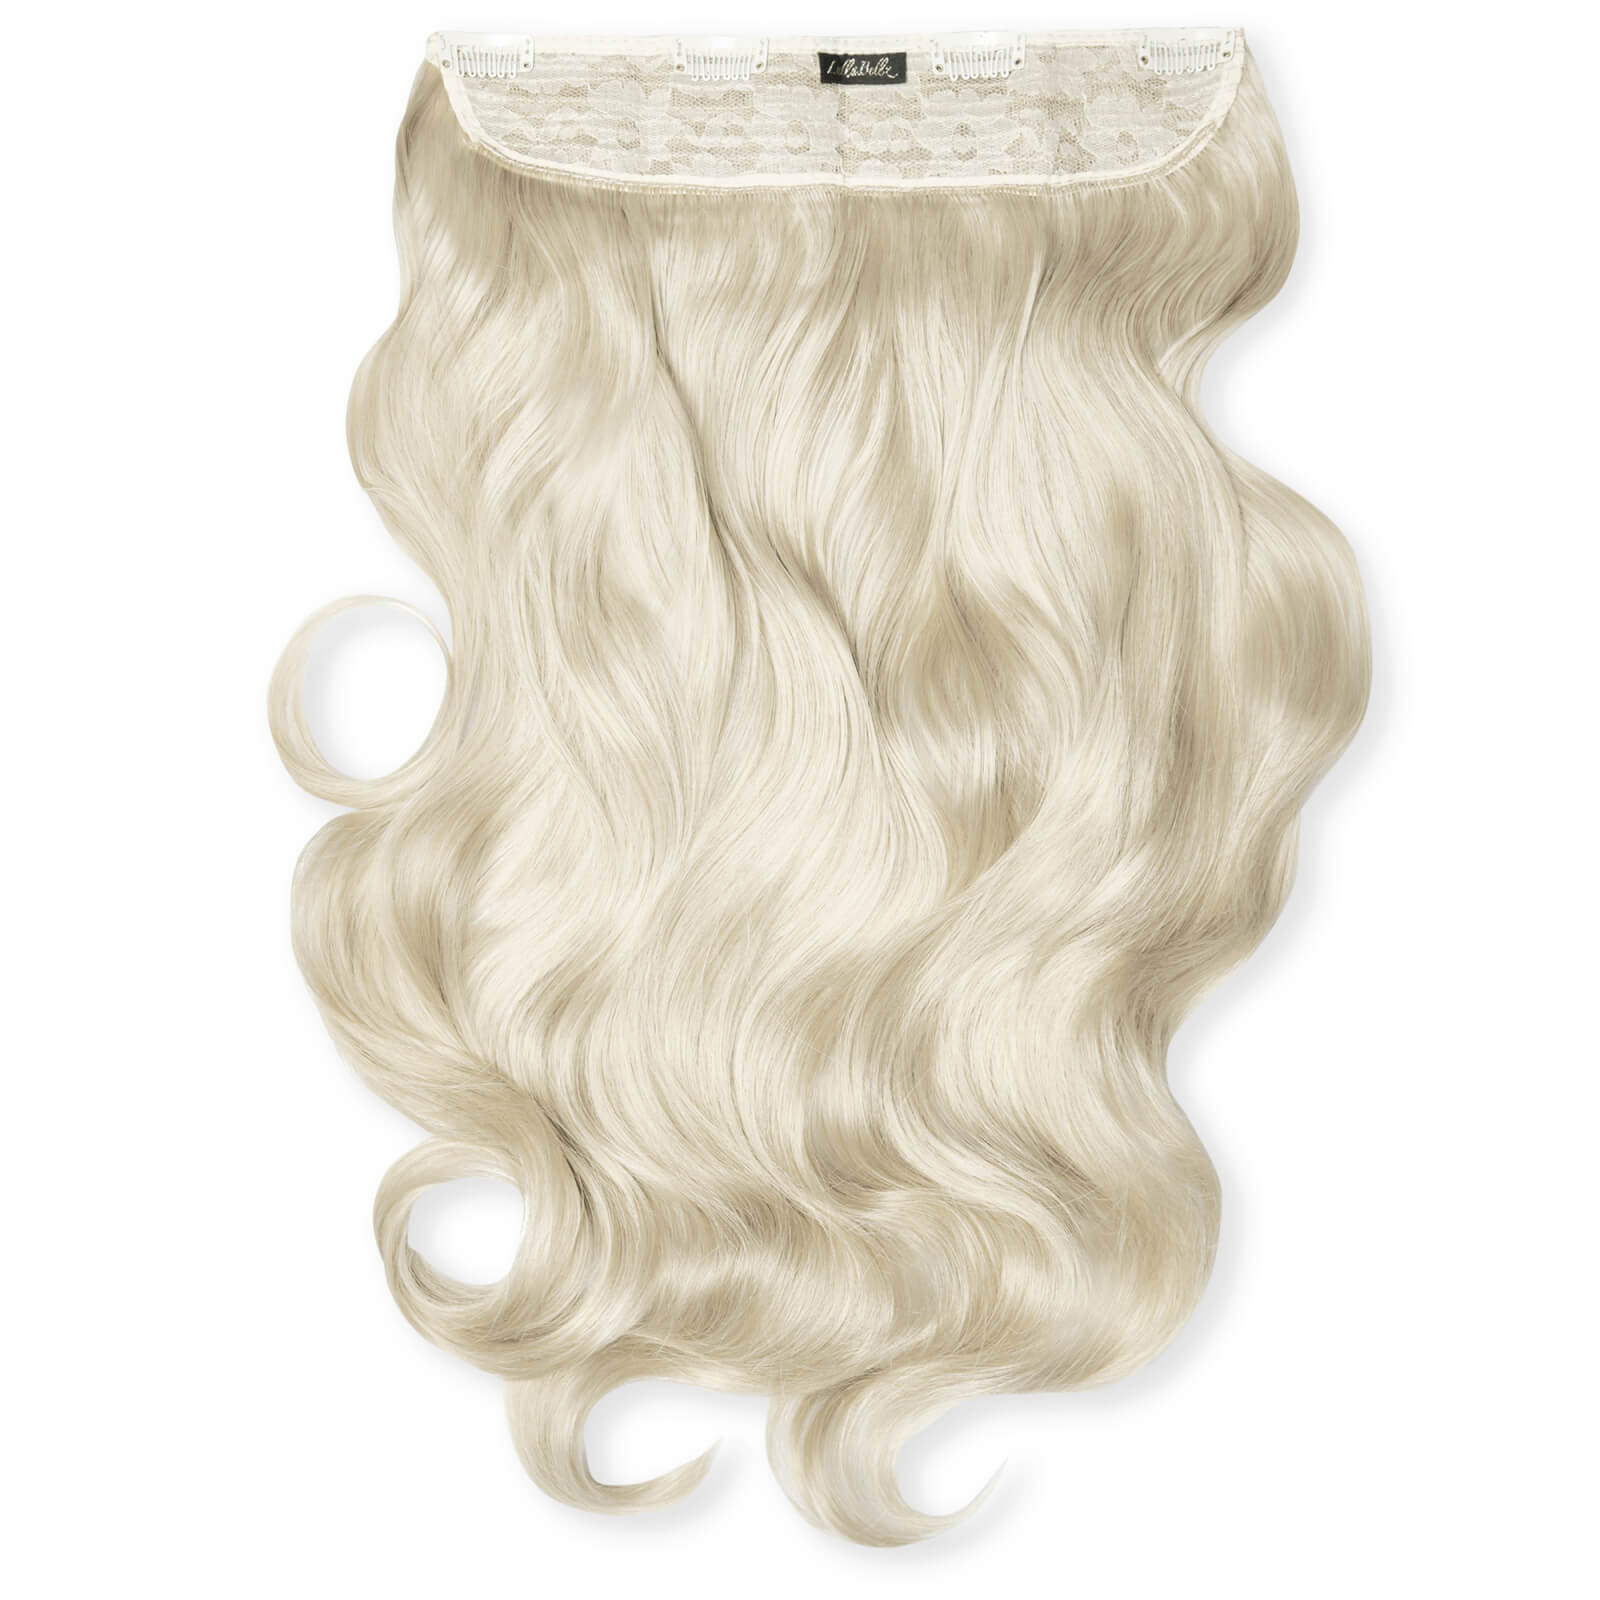 LullaBellz Thick 20 1-Piece Curly Clip in Hair Extensions (Various Colours) - Bleach Blonde von Lullabellz